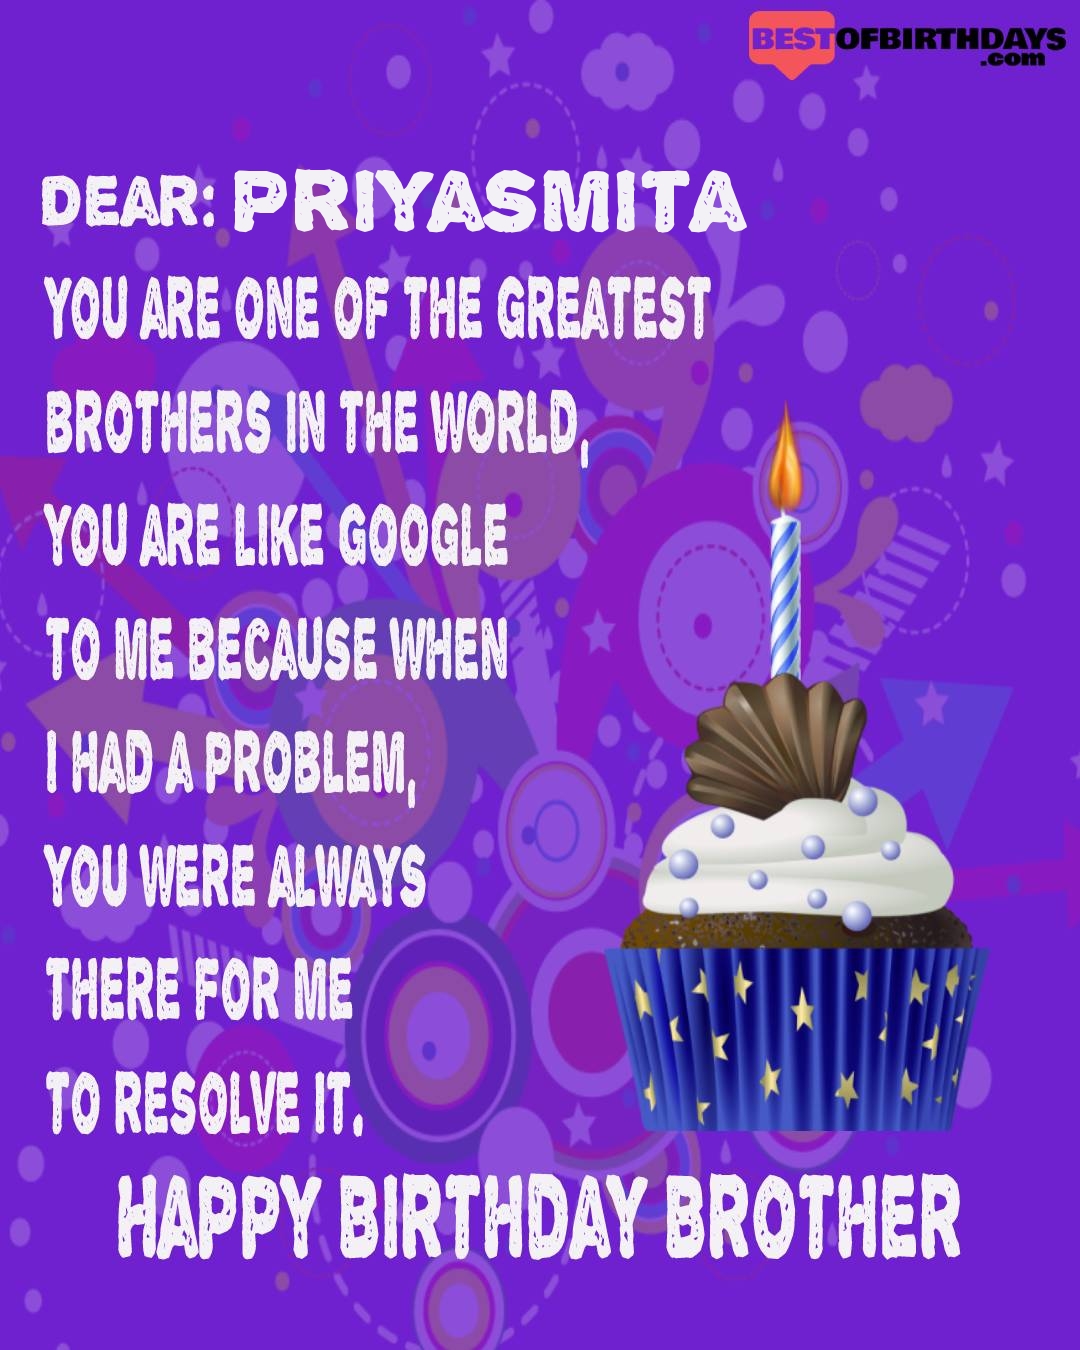 Happy birthday priyasmita bhai brother bro